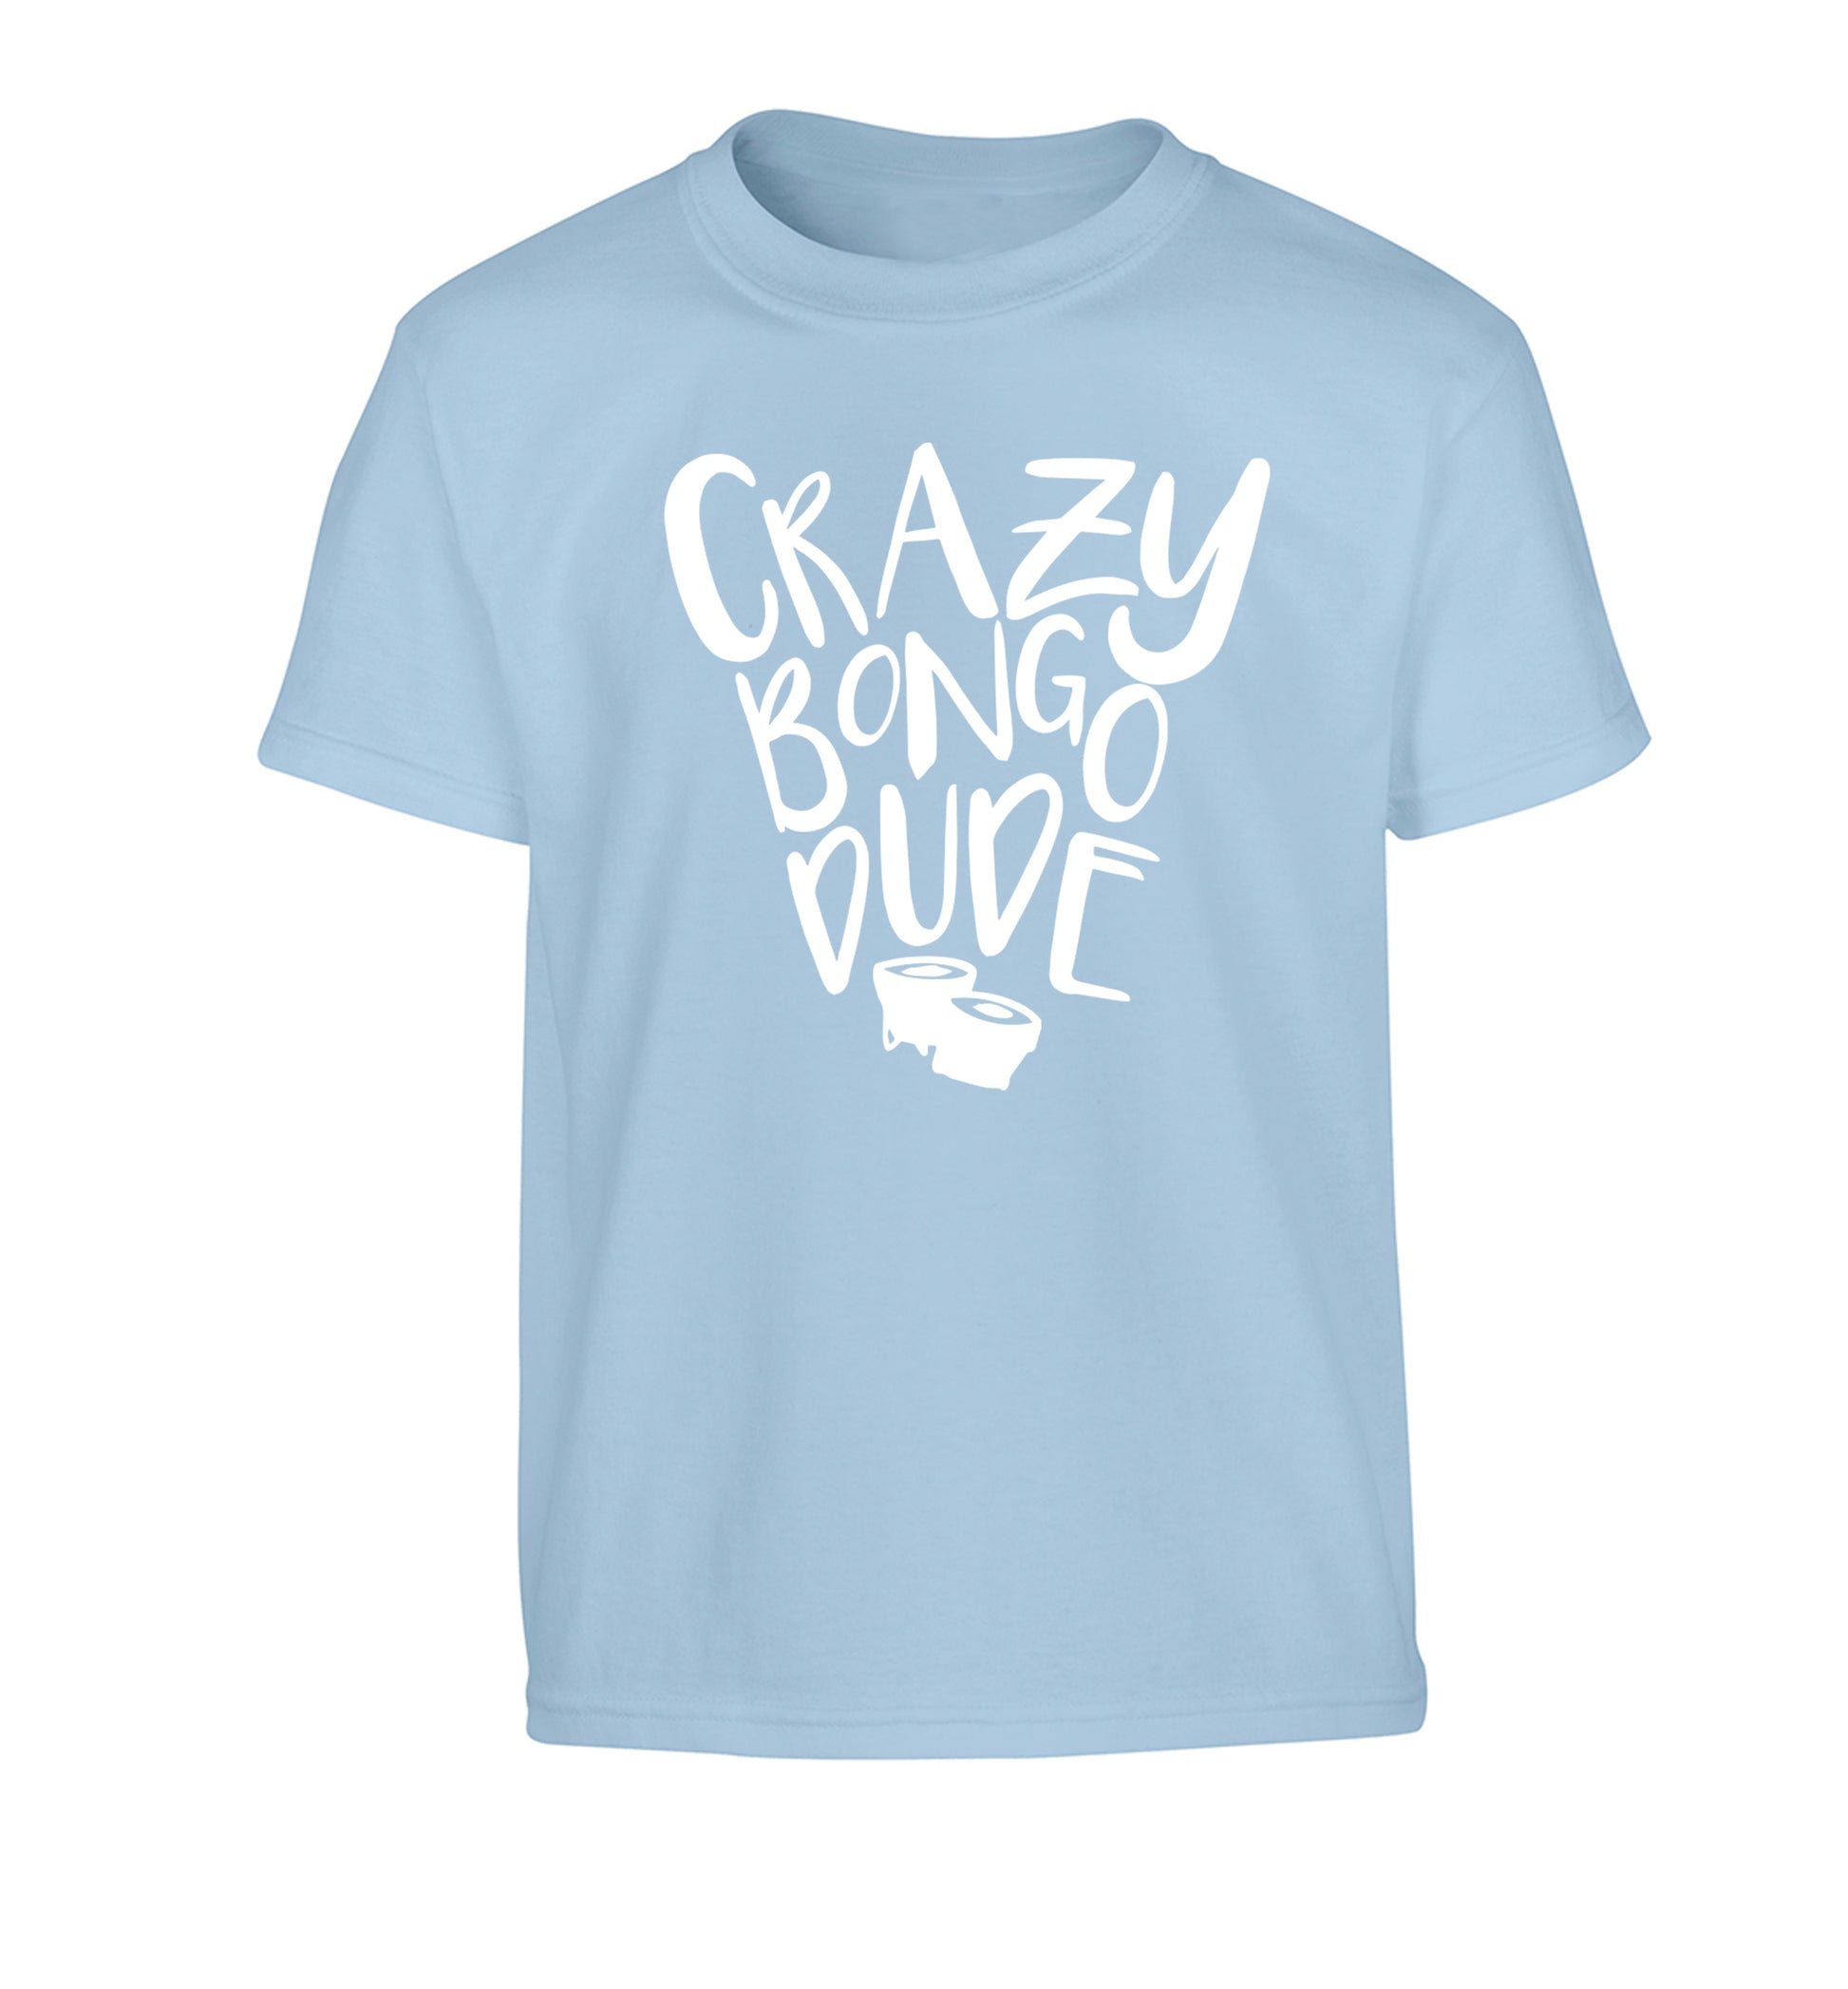 Crazy bongo dude Children's light blue Tshirt 12-14 Years